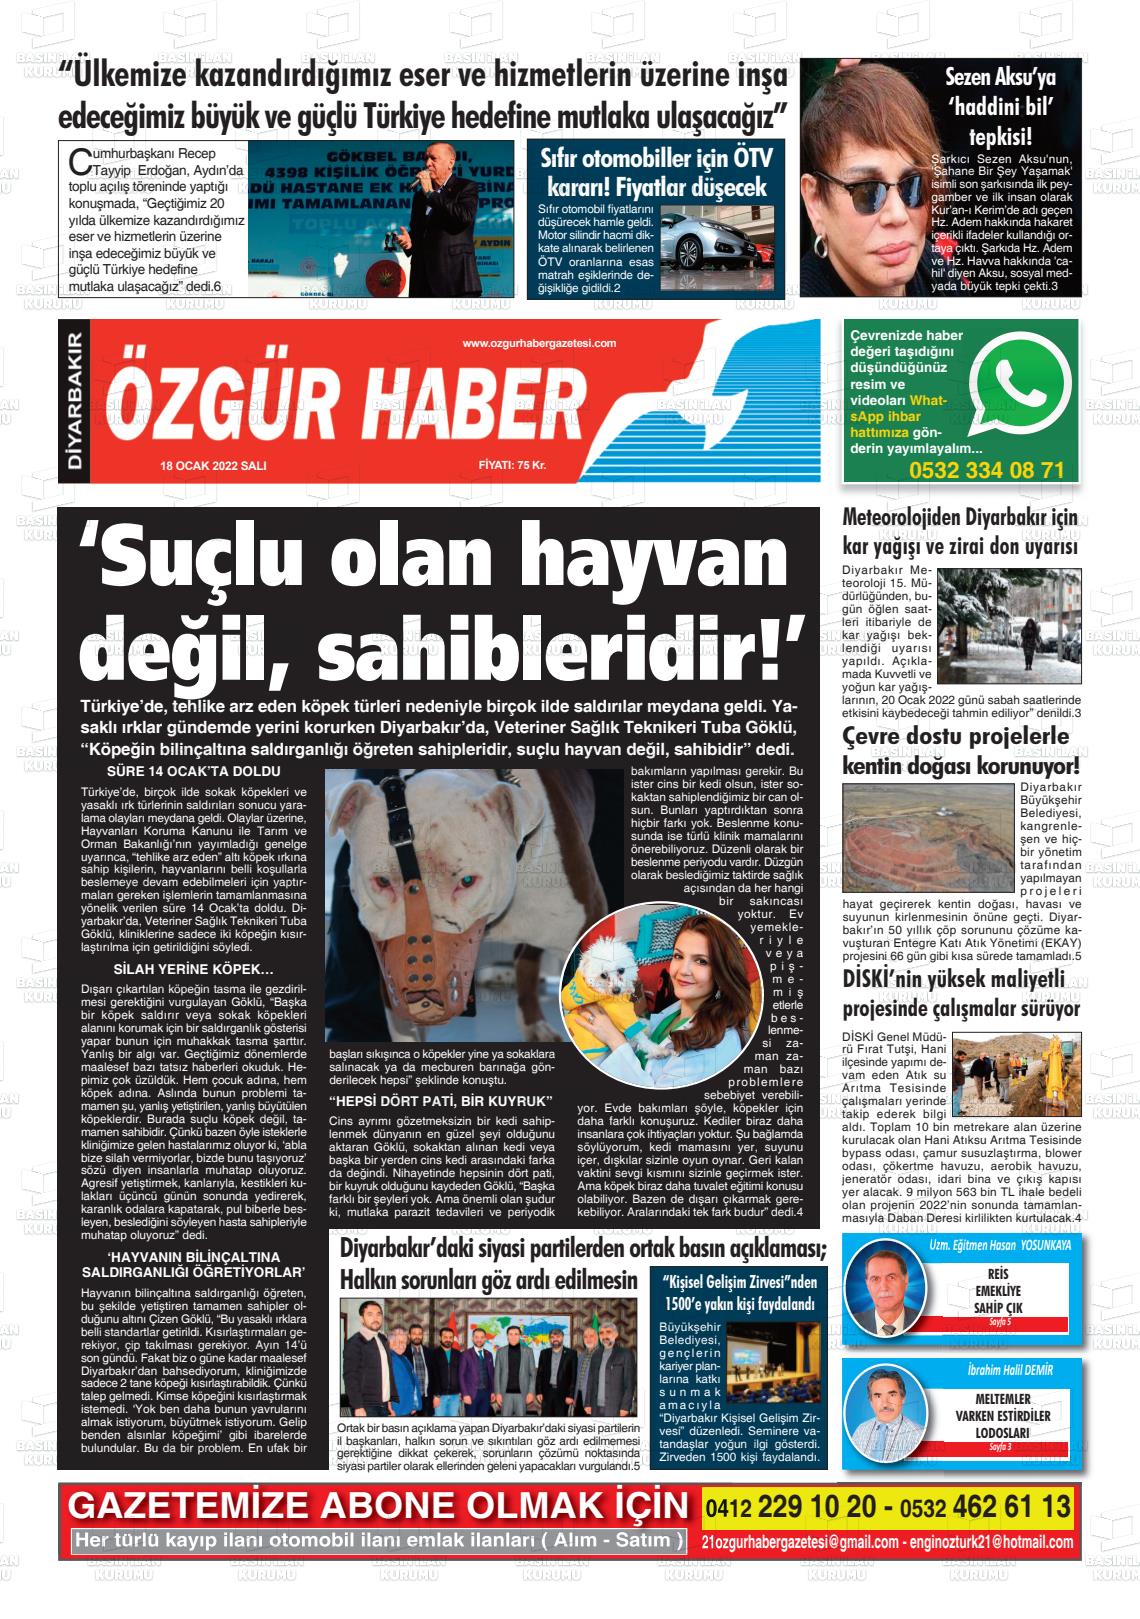 18 Ocak 2022 Özgür Haber Gazete Manşeti